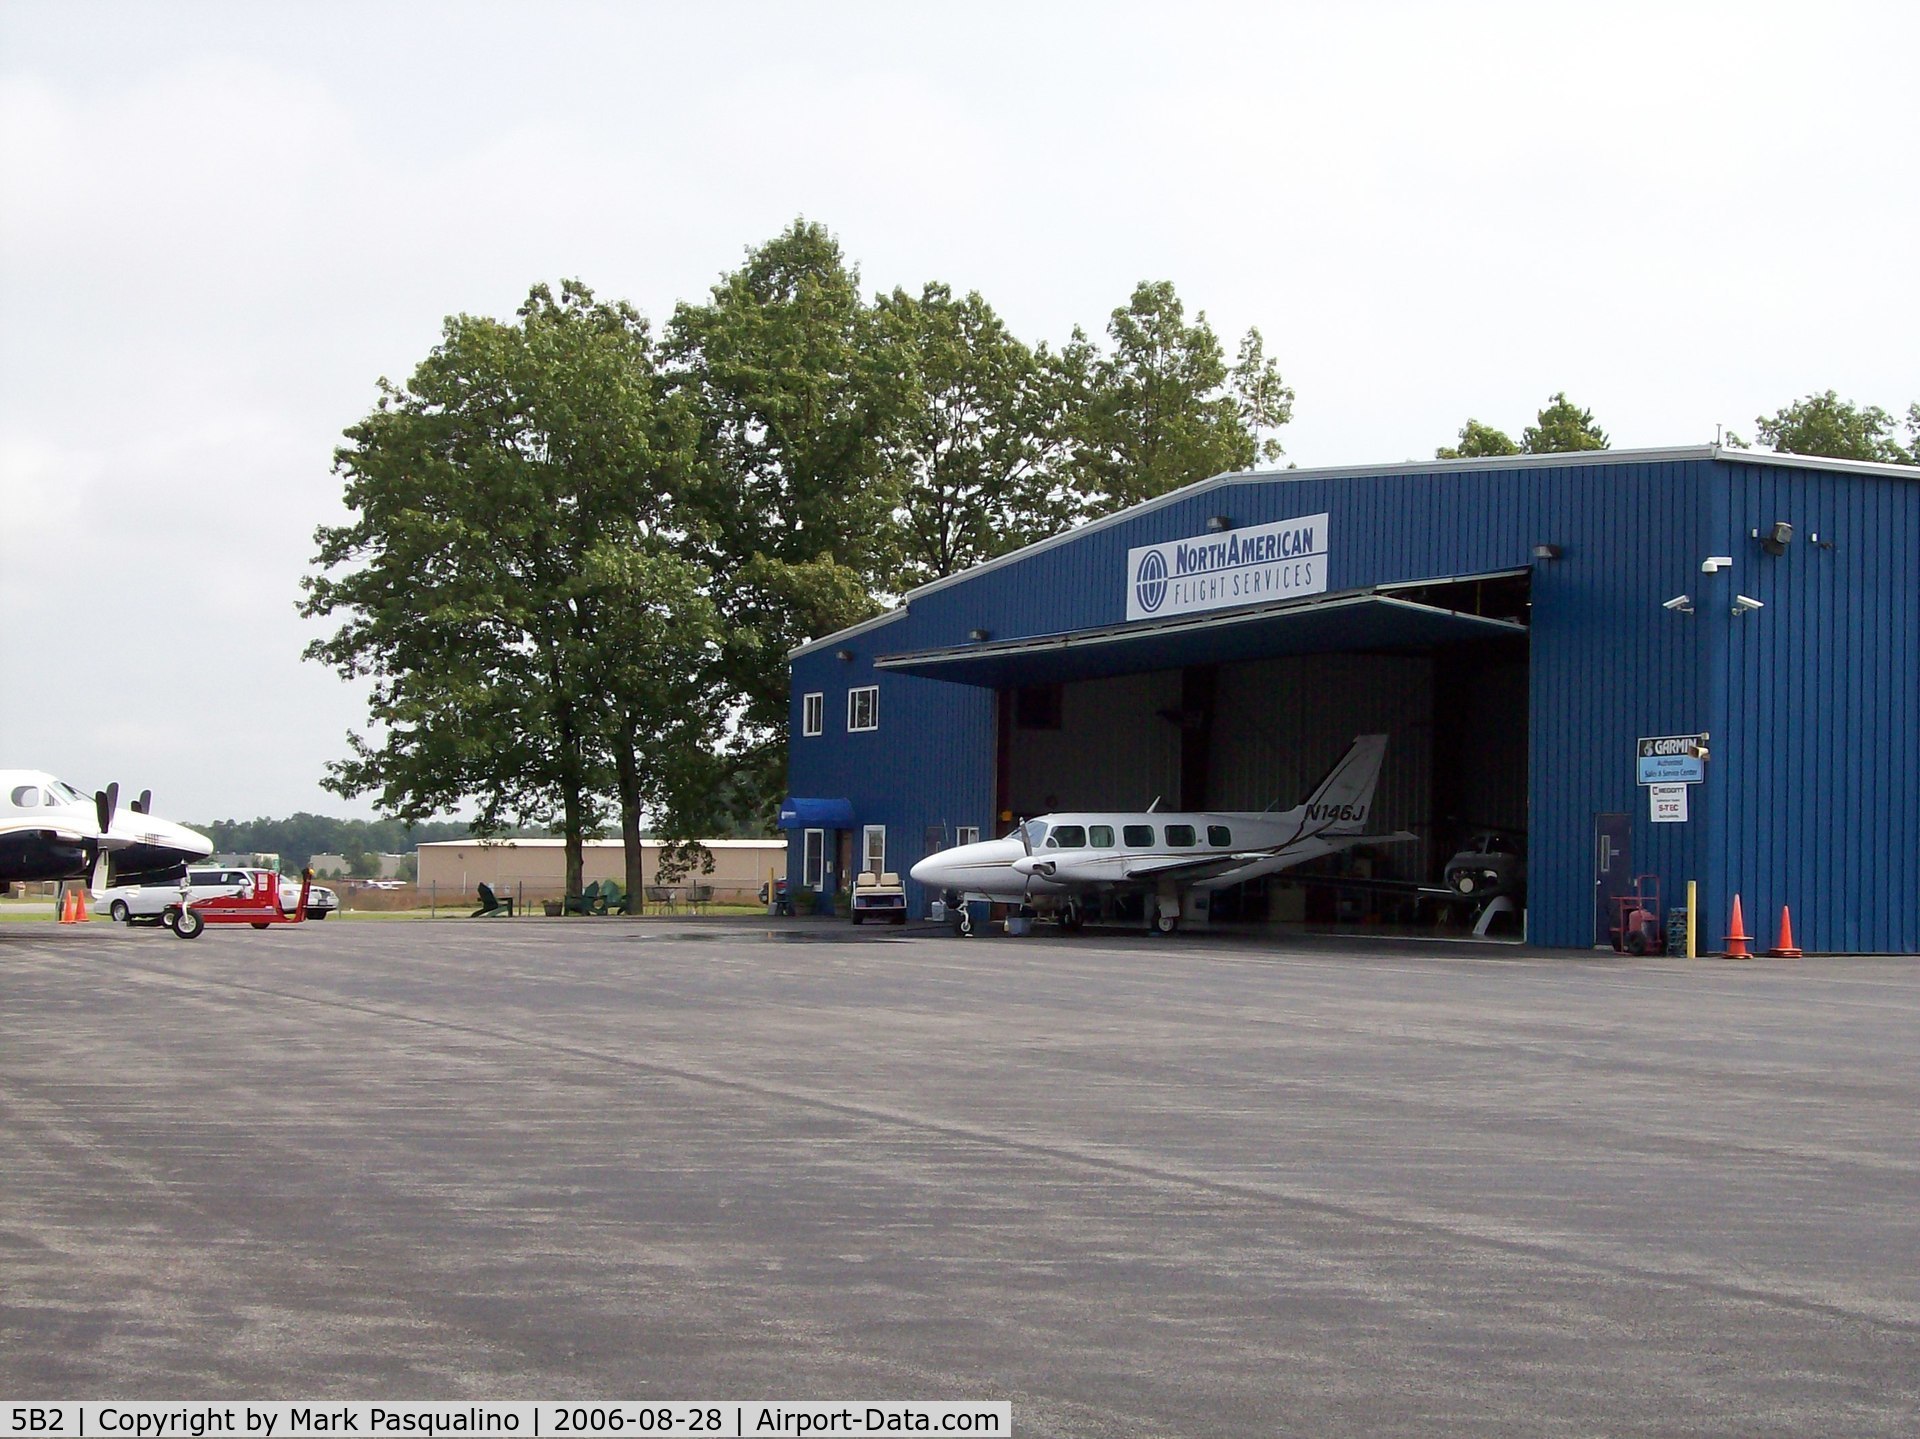 Saratoga County Airport (5B2) - General Aviation Ramp   Saratoga Springs, NY